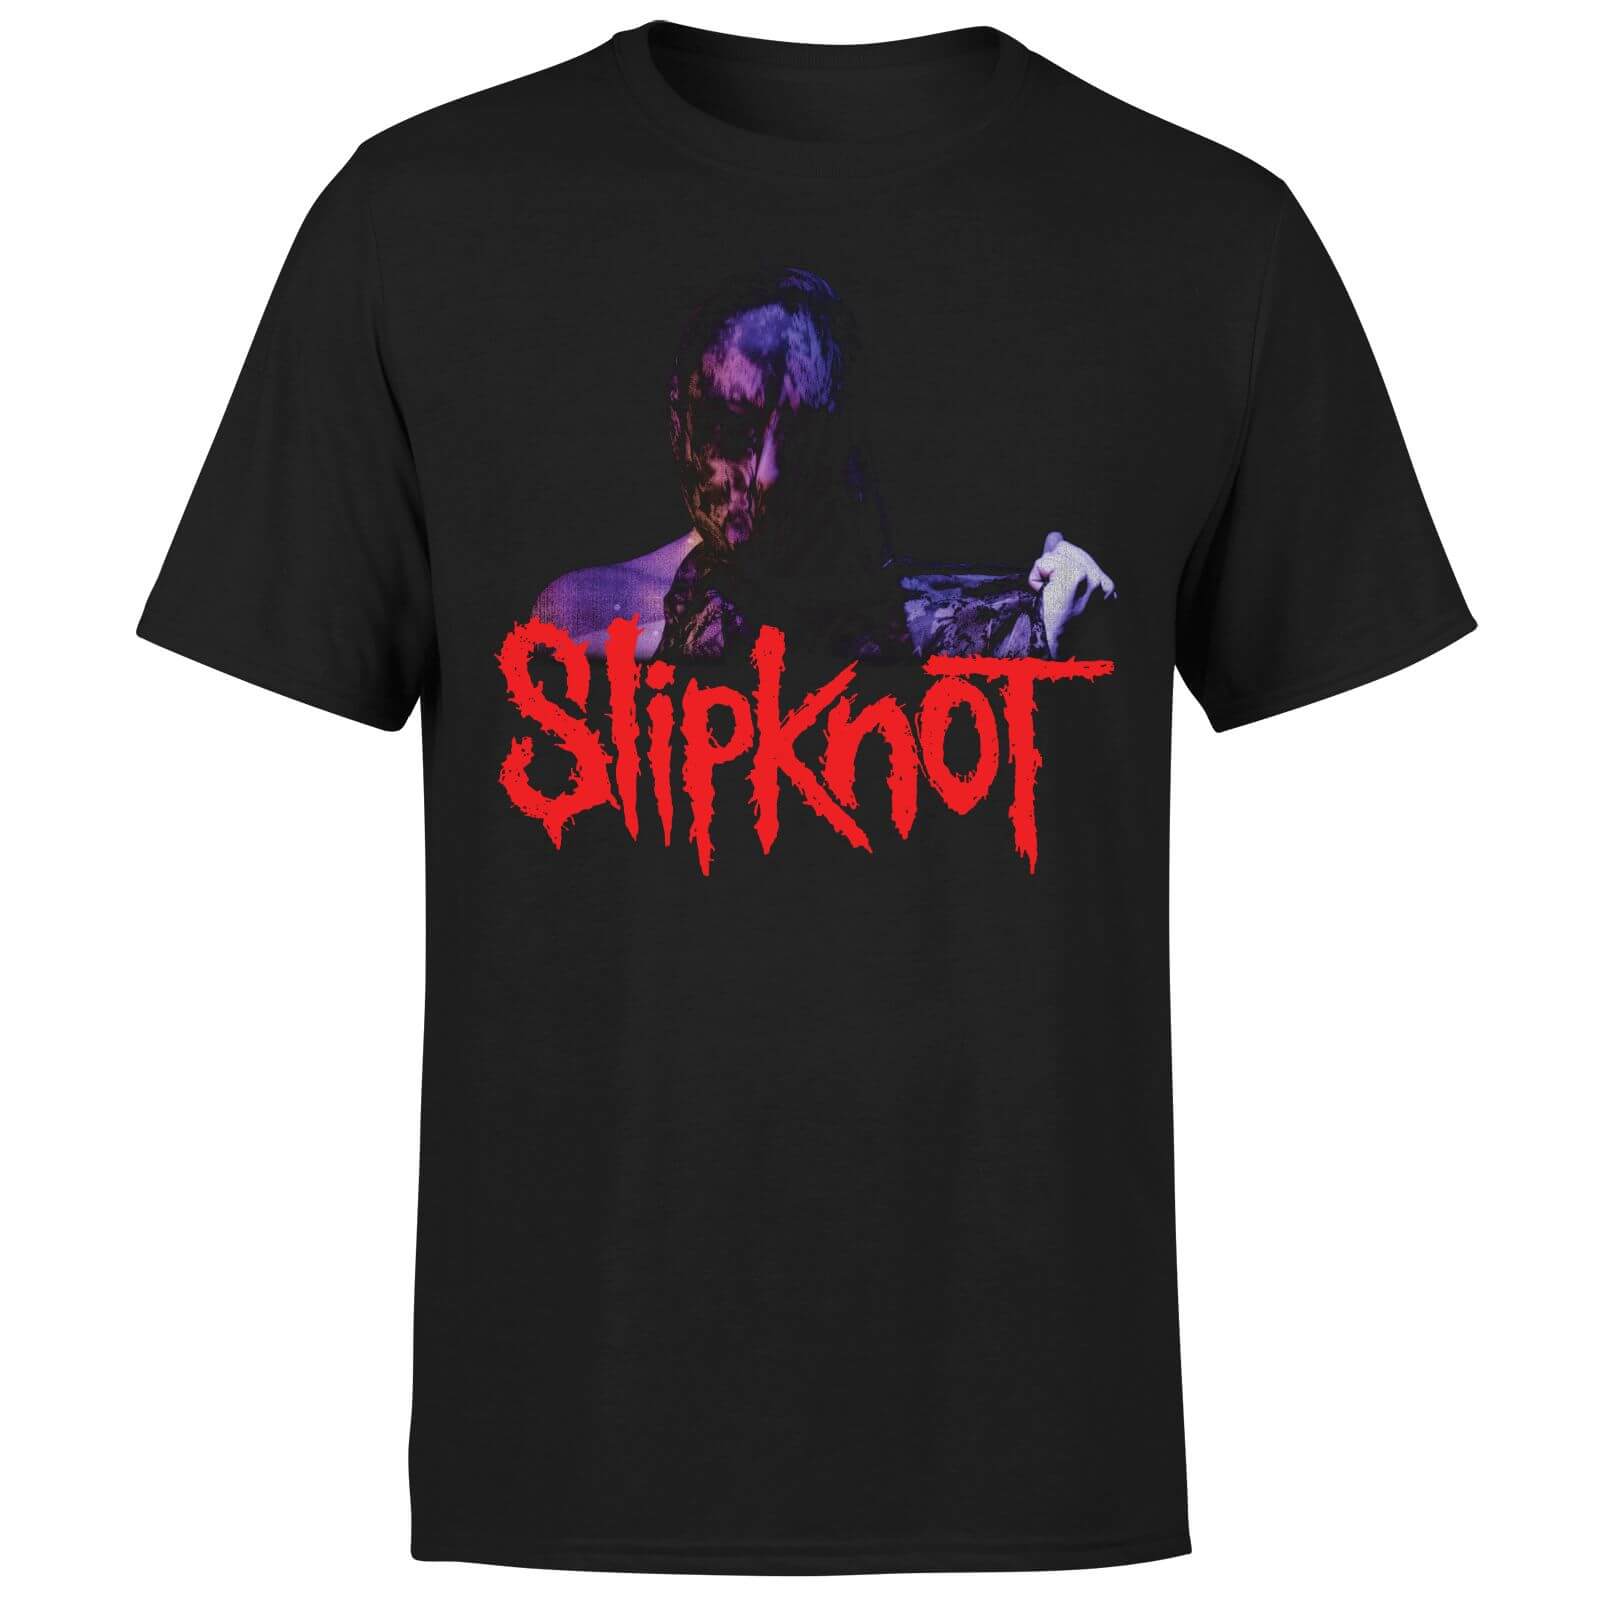 Slipknot We Are Not Your Kind Album Cover T-Shirt - Black - L - Black